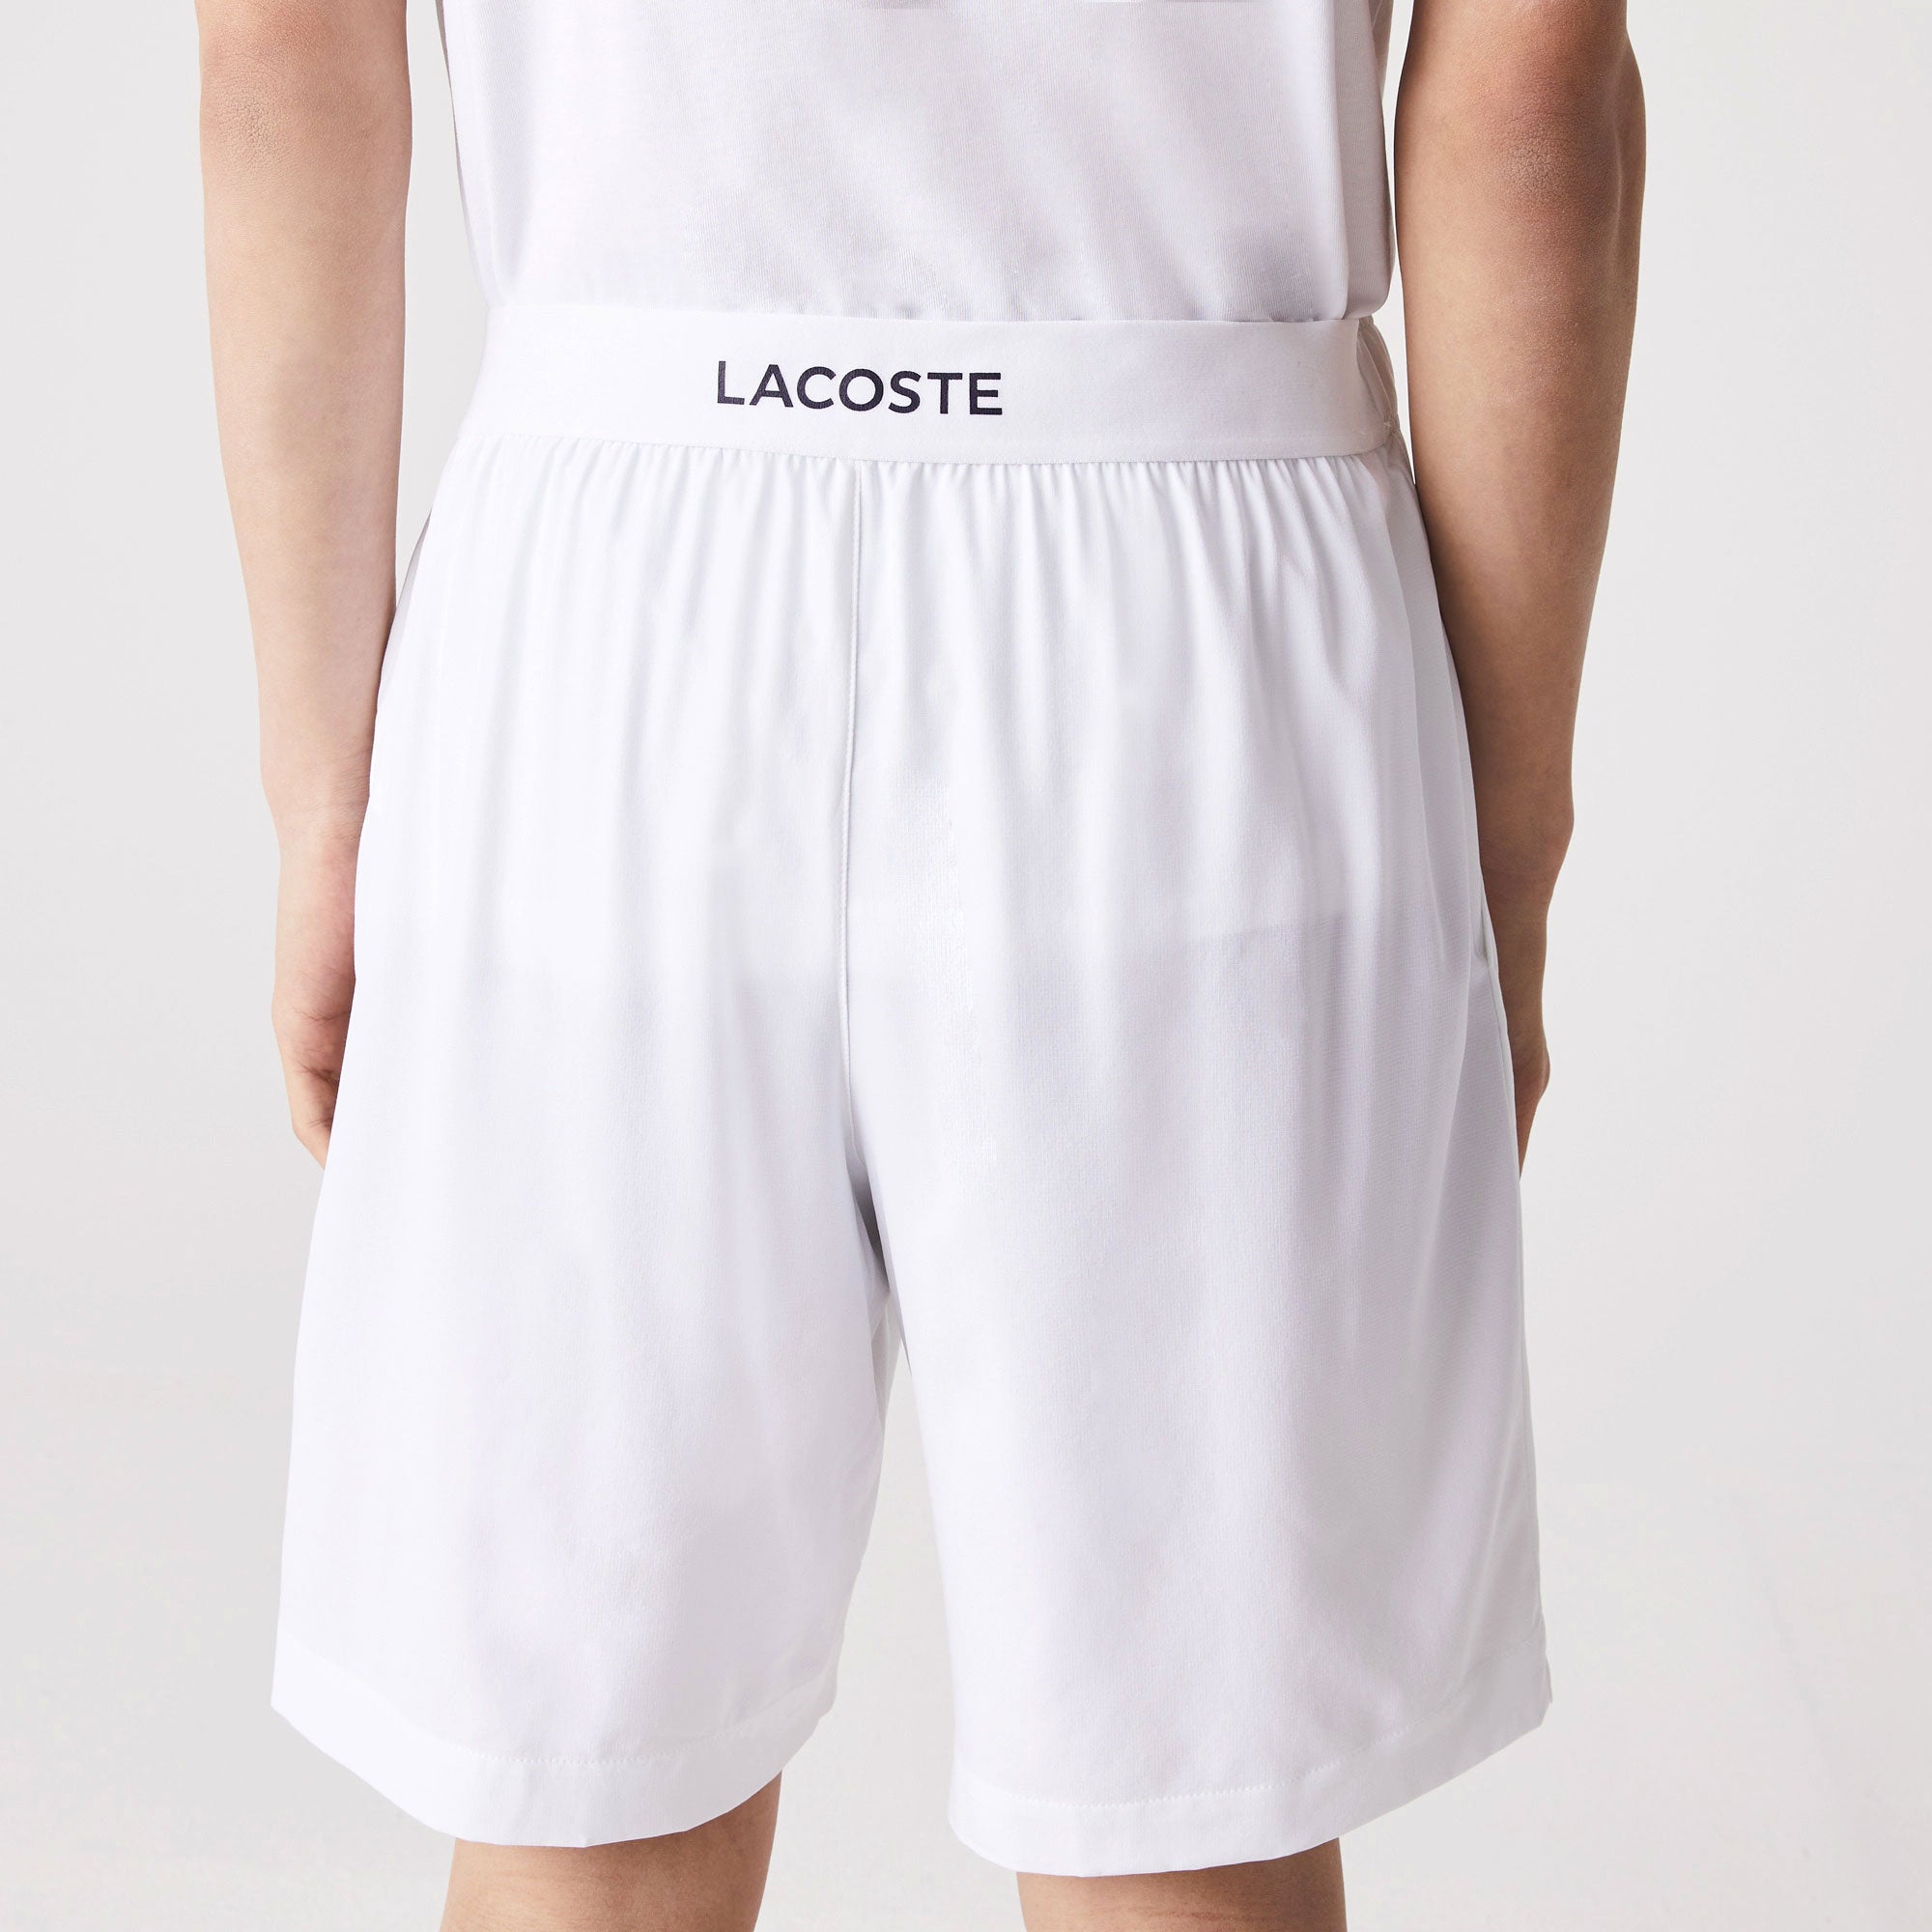 Lacoste Men's Woven Tennis Shorts White (3)